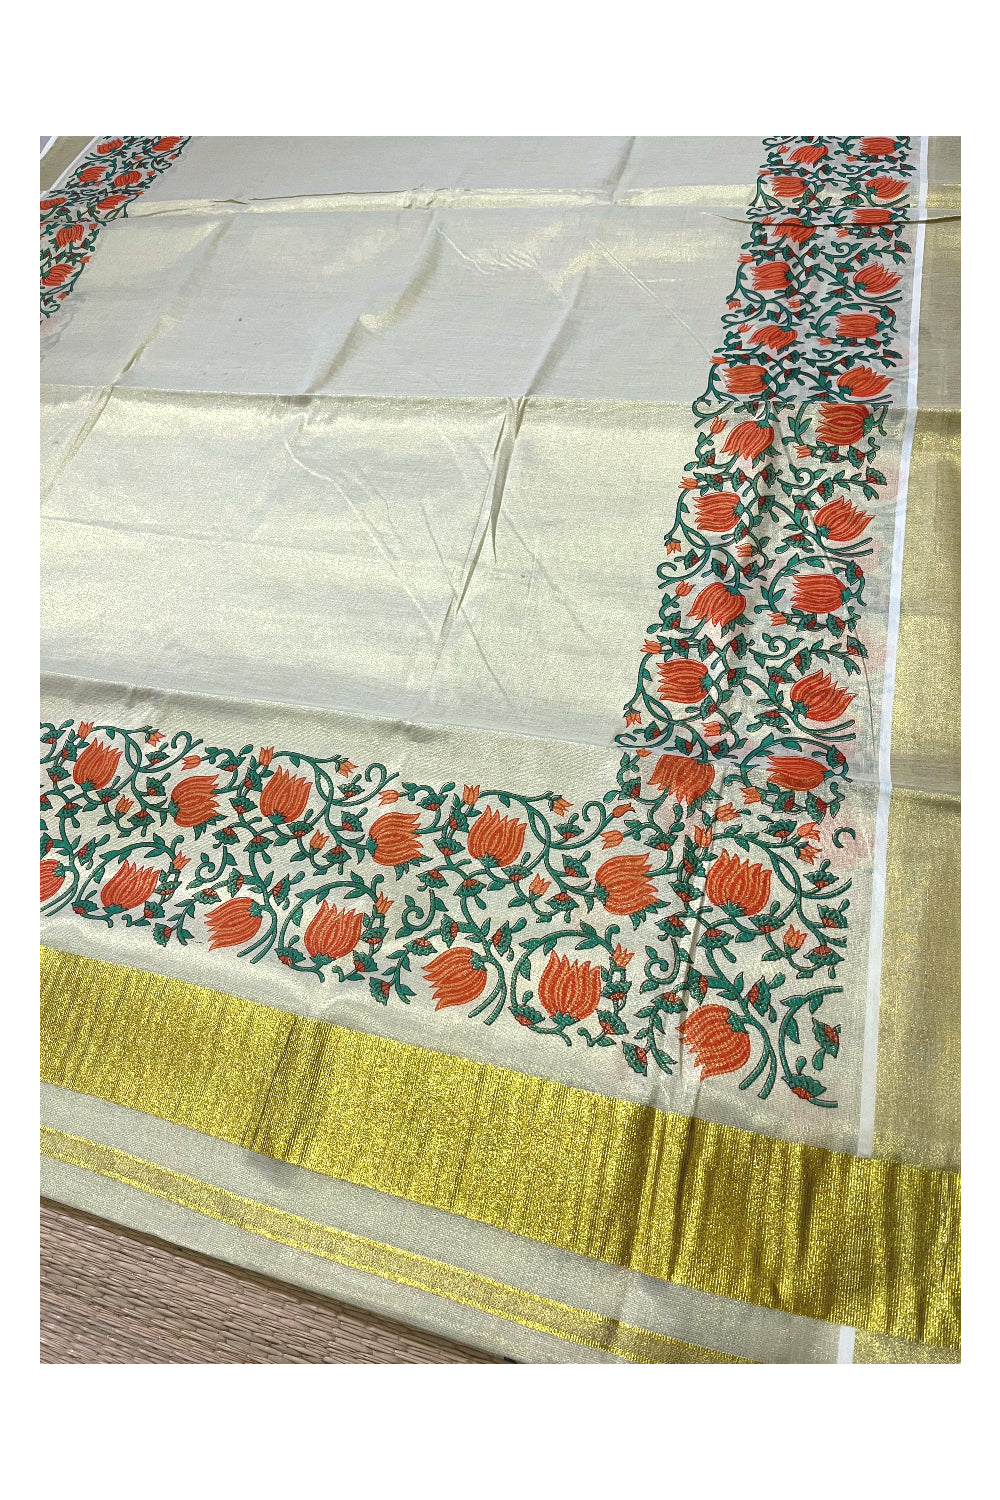 Southloom Jaipur Artisans & Kerala Weavers Collab Orange and Green Floral Printed Tissue Kasavu Saree (2023 Onam Exclusive Kerala Saree)